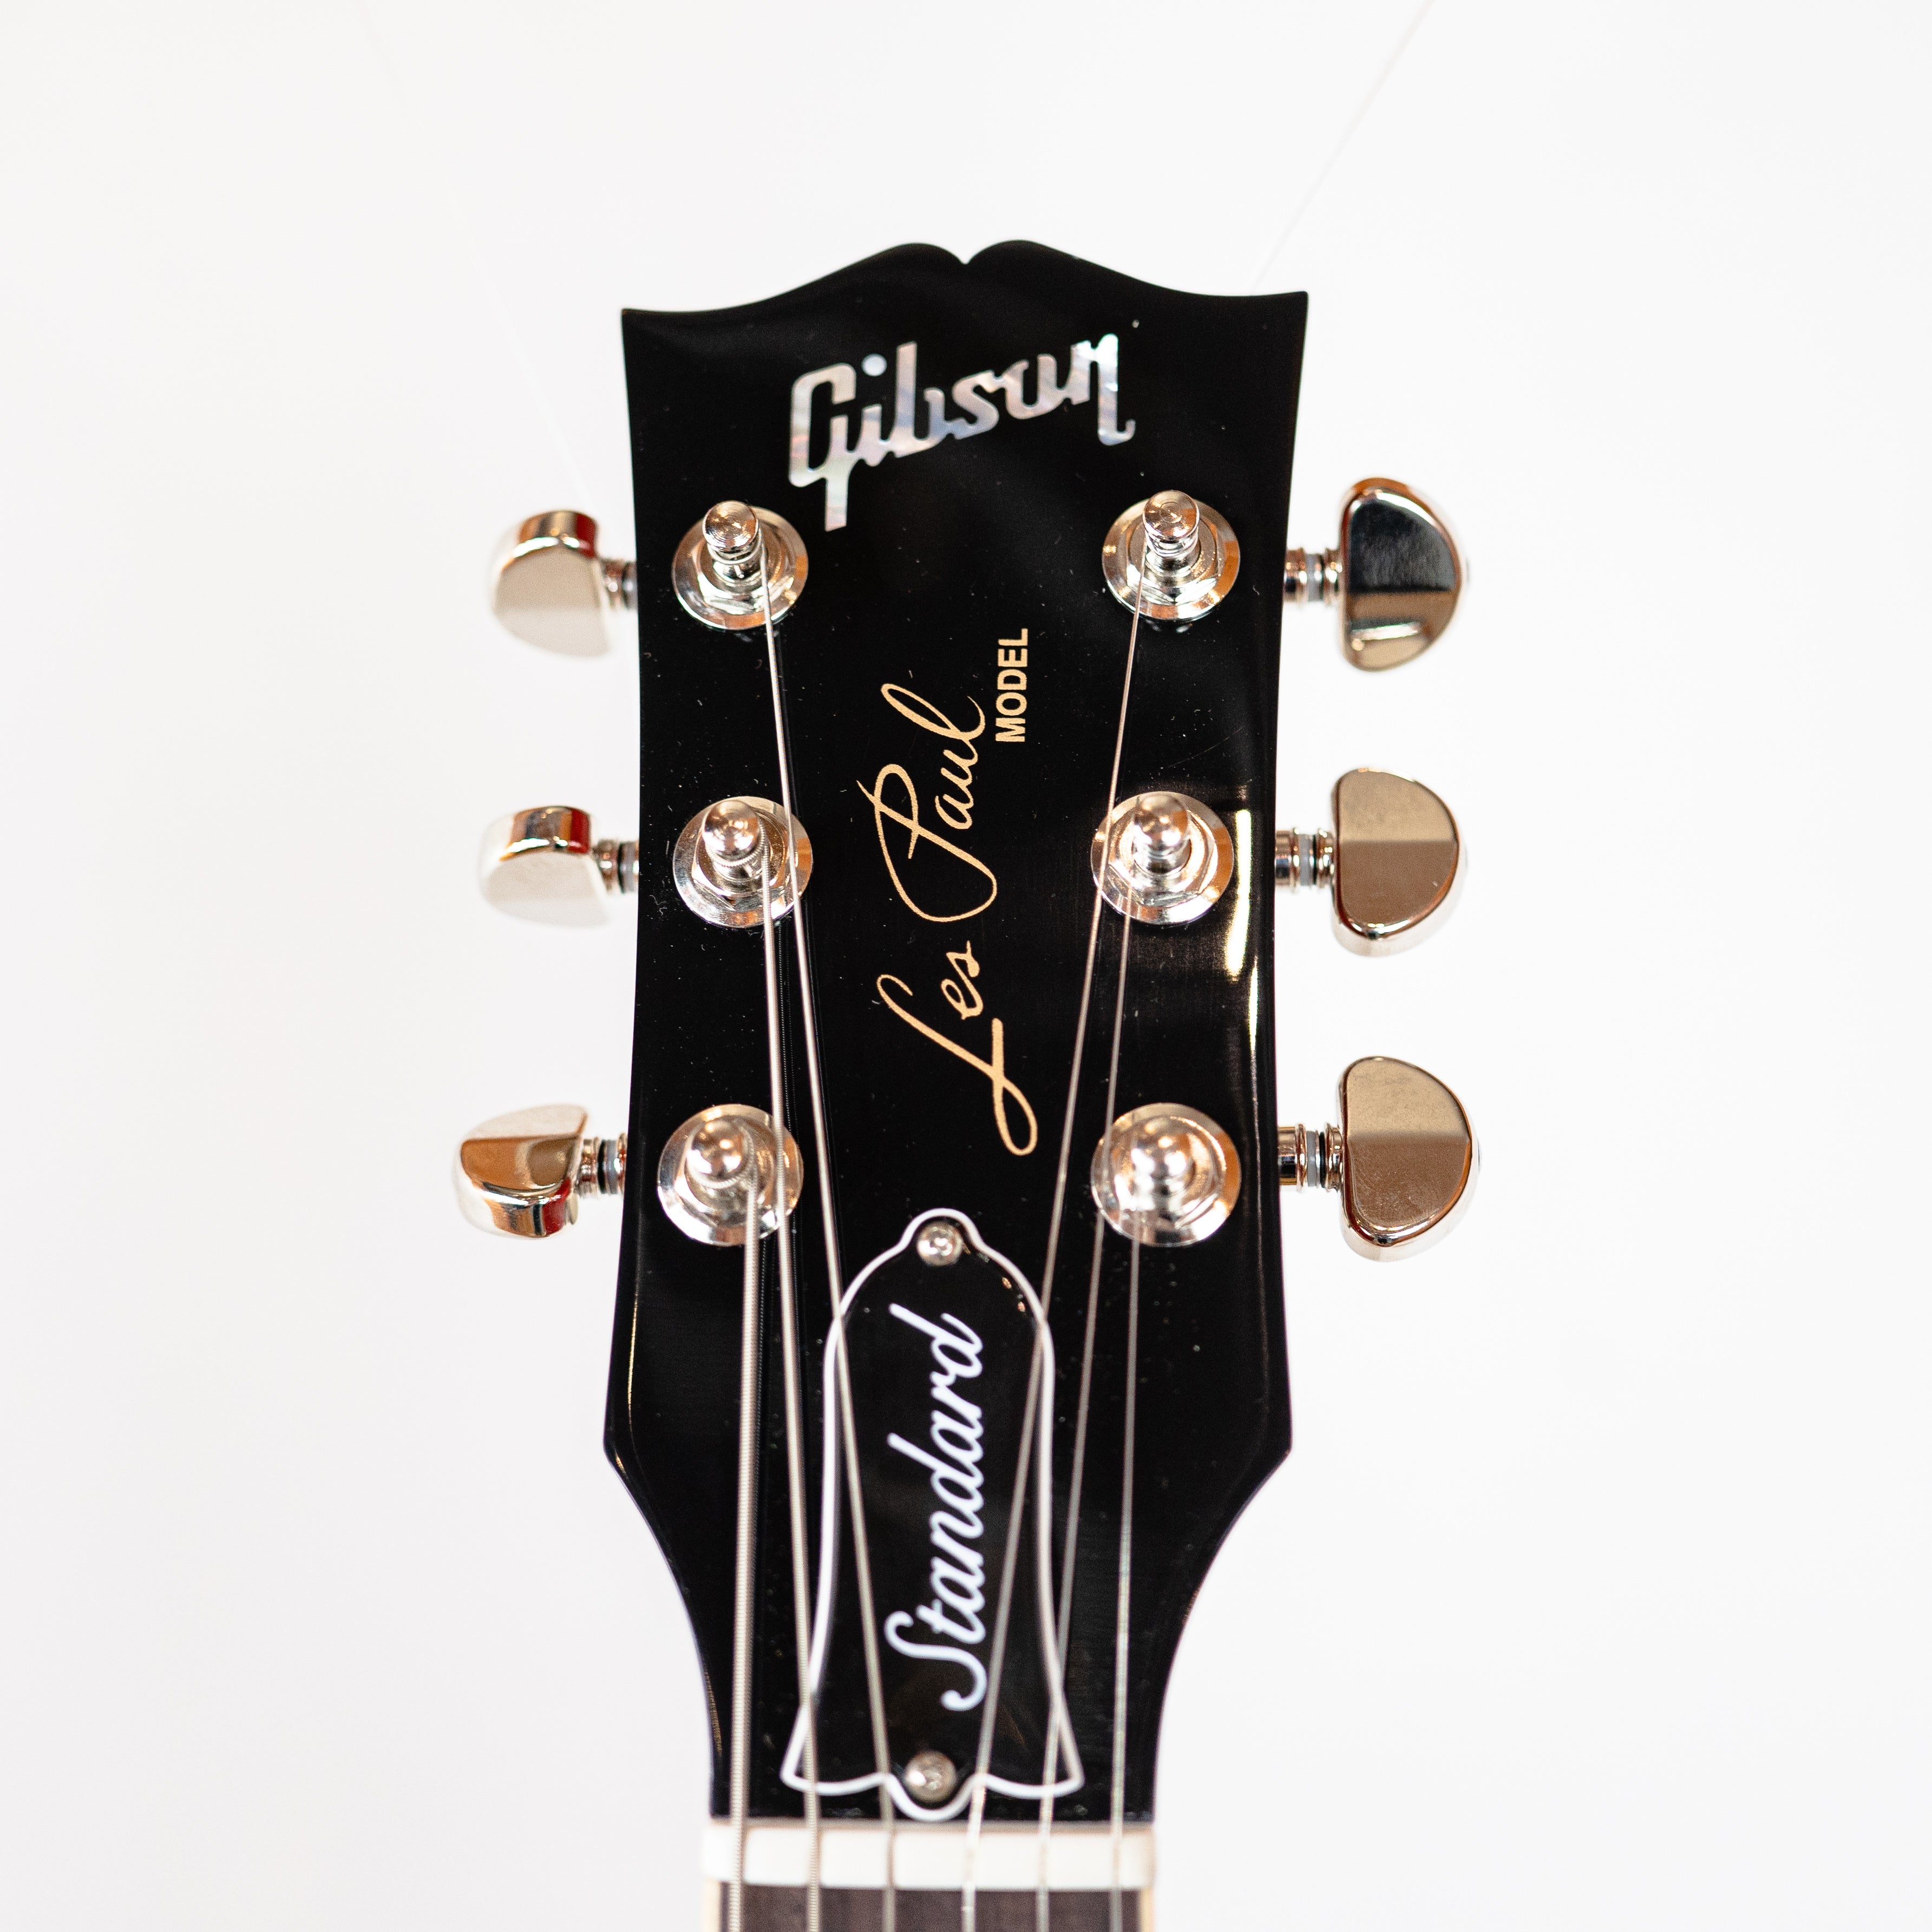 Gibson Les Paul Standard 60s Figured Top Iced Tea